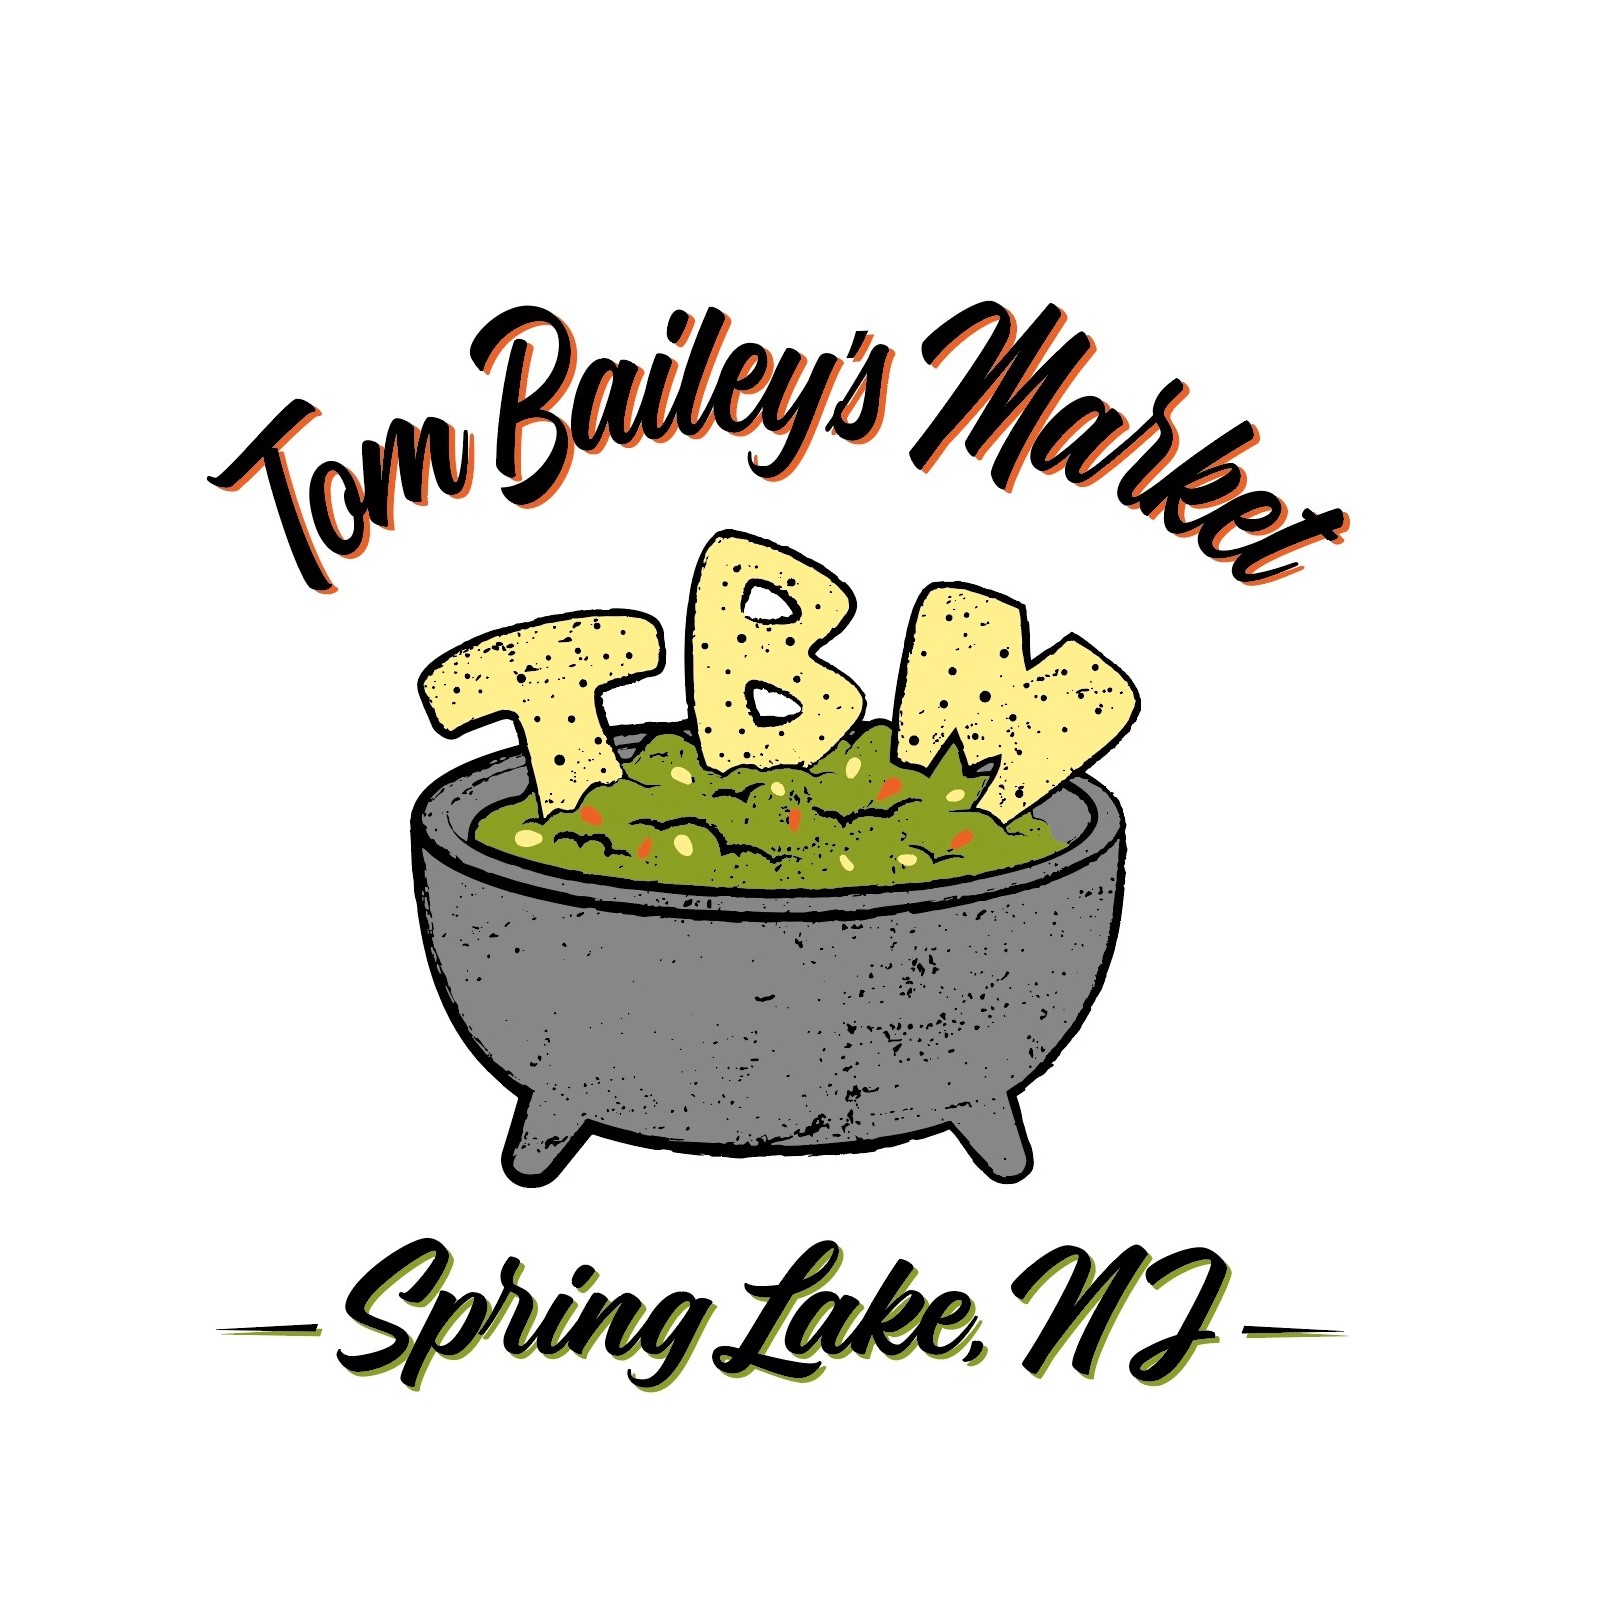 Tom Bailey's Market